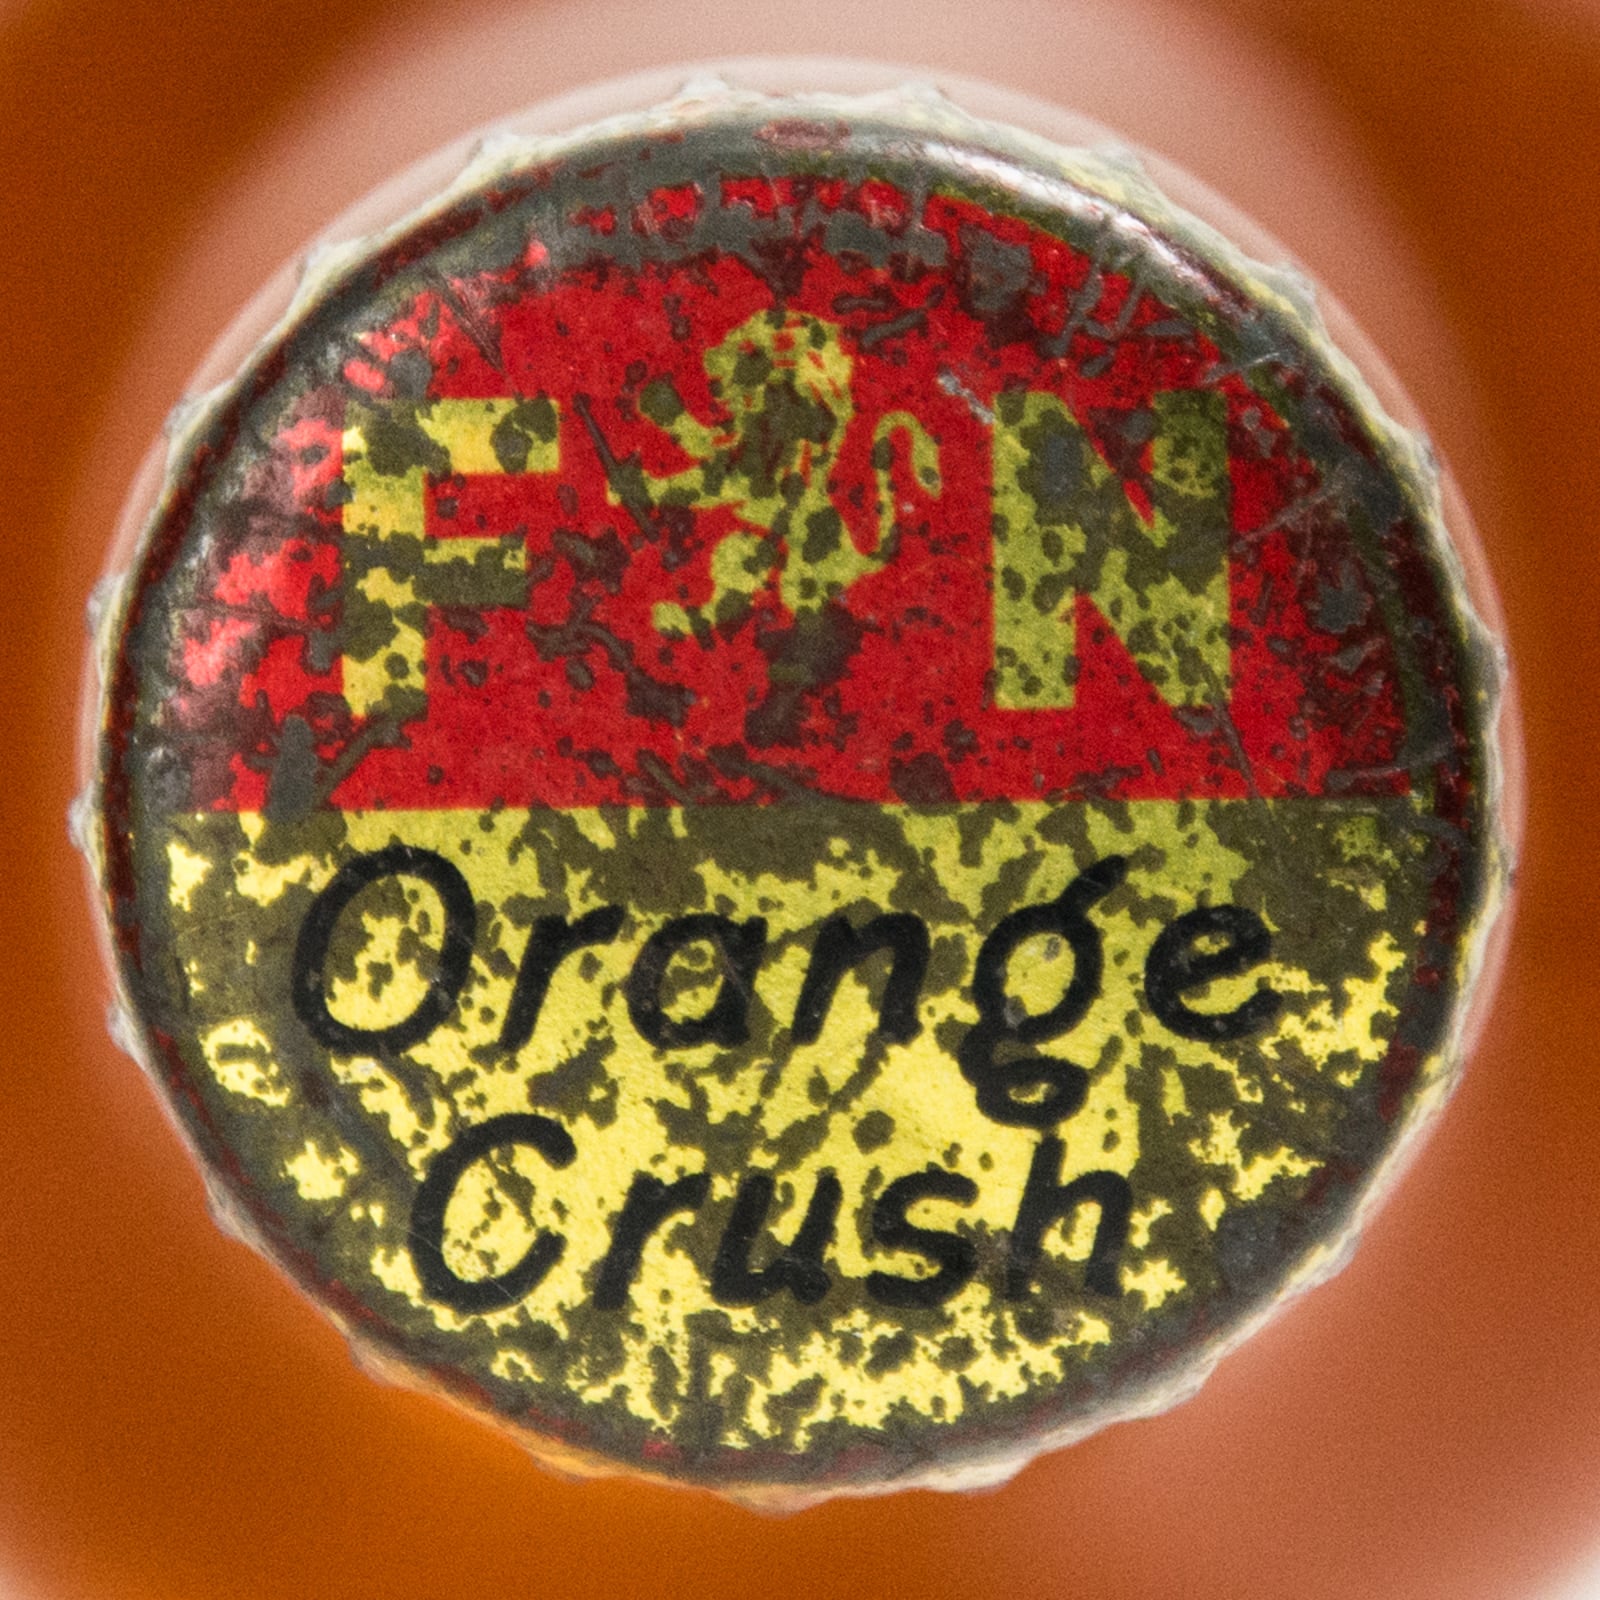 F&N Orange Crush Vintage Bottle